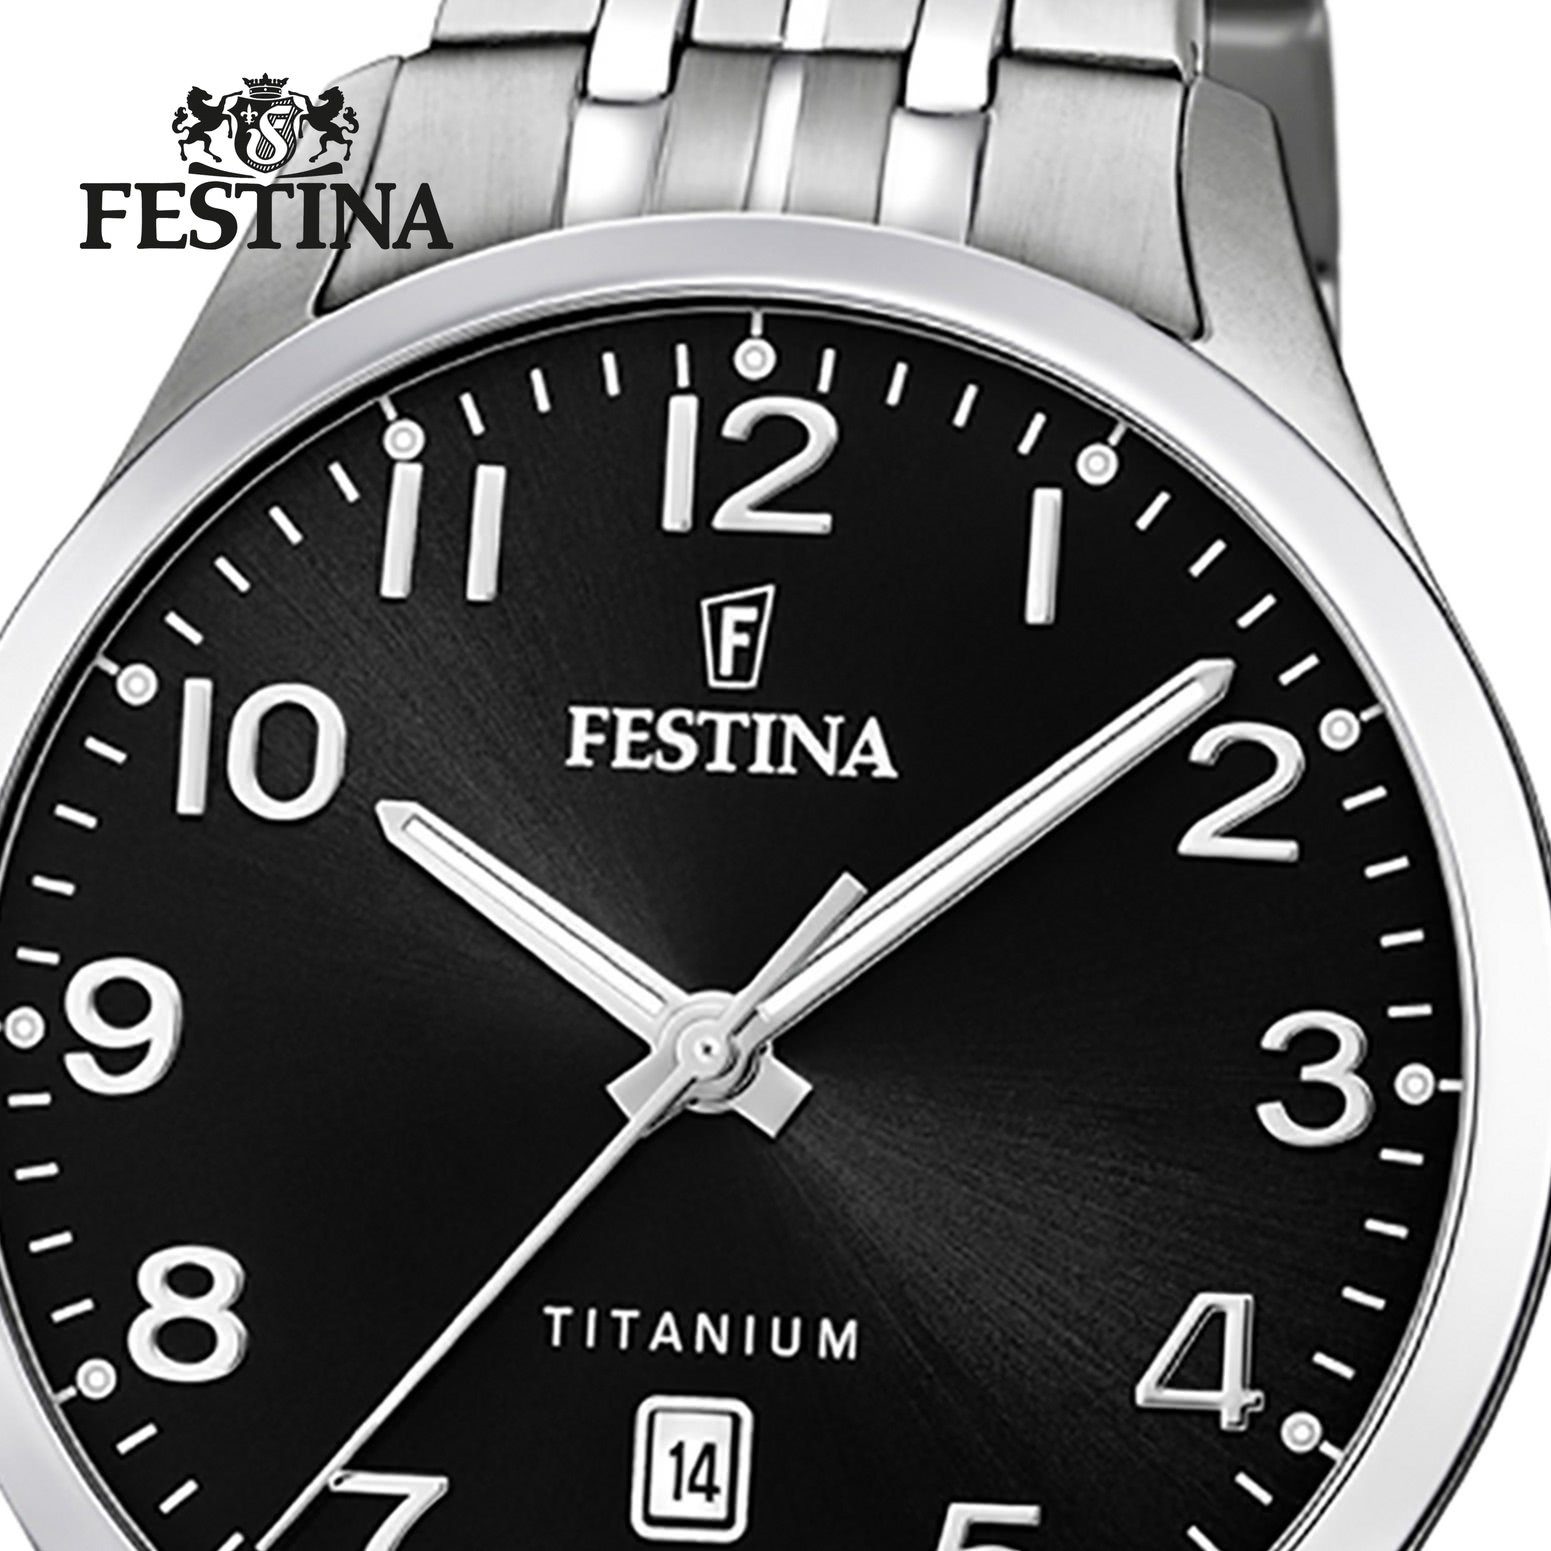 silber Festina F20466/3 Uhr Herren Titanarmband Armbanduhr Elegant, Festina Herren rund, Quarzuhr